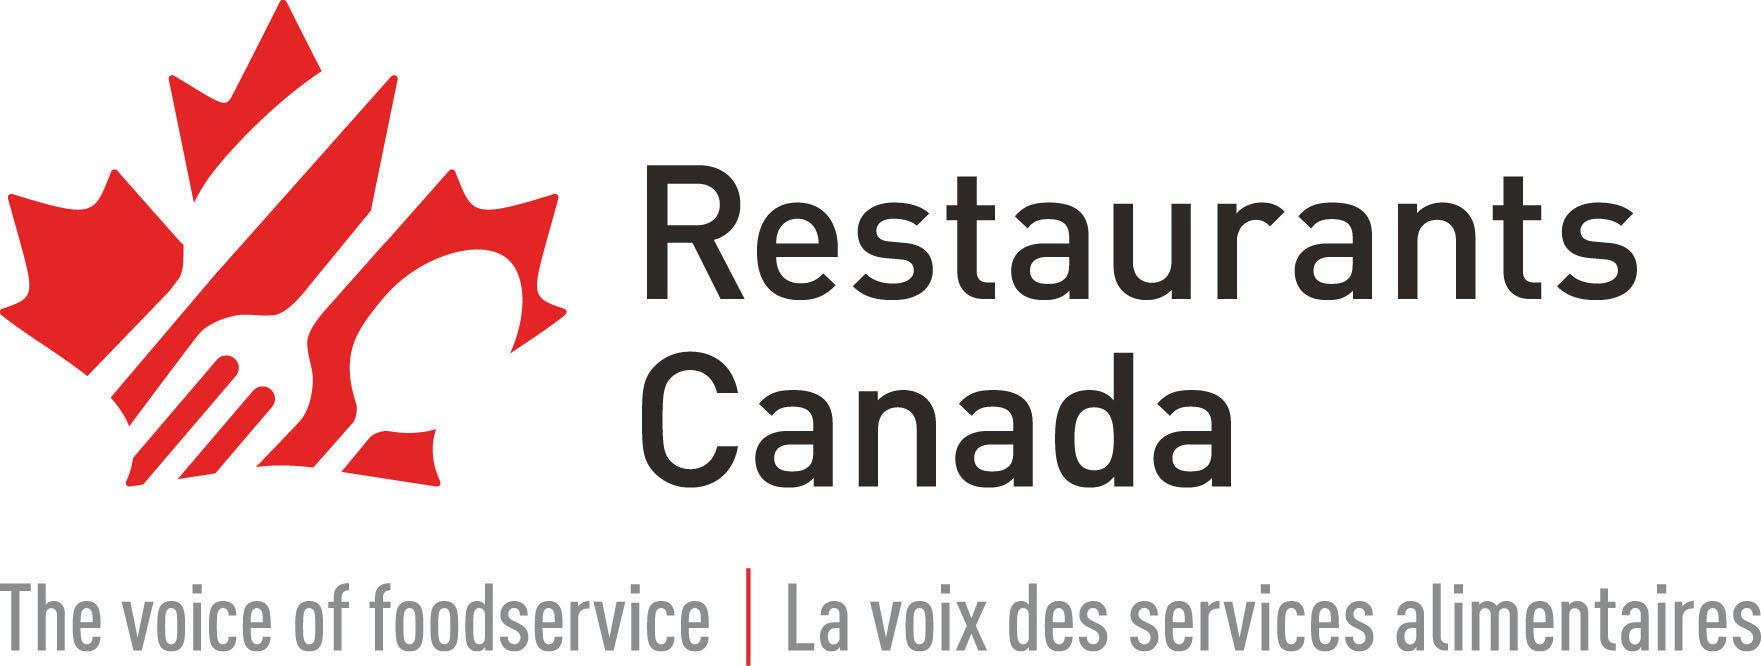 Restaurants Canada I